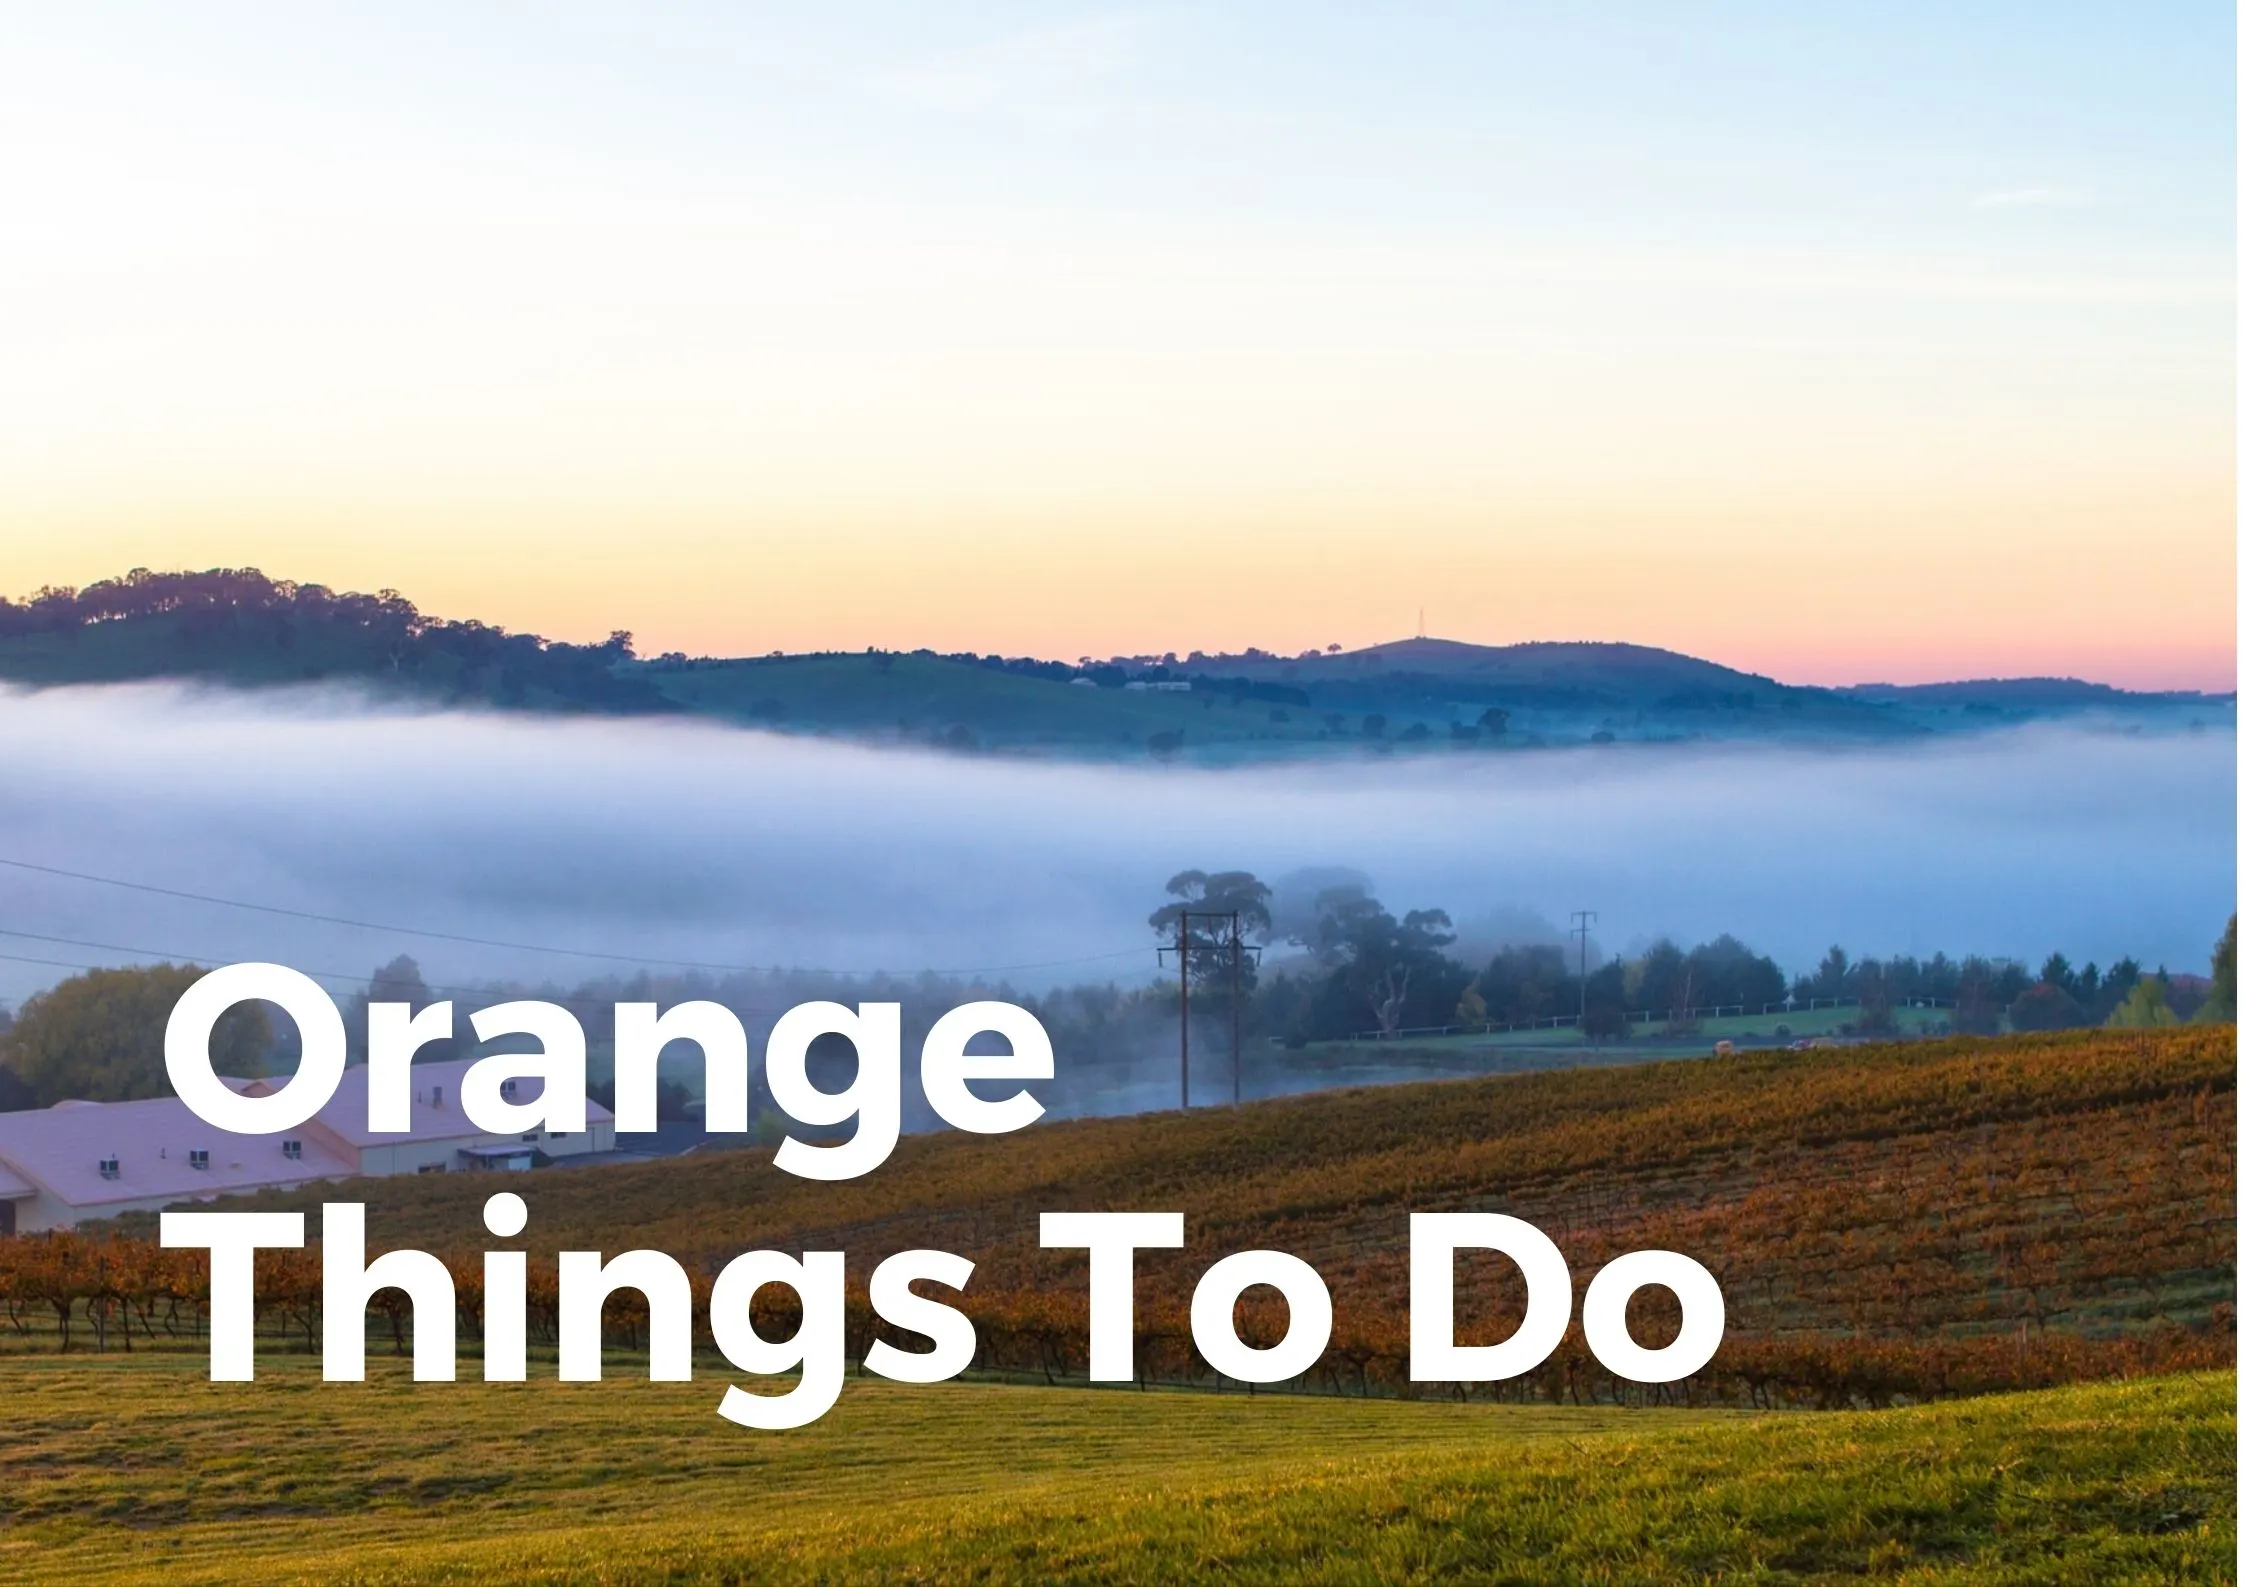 Orange - Things to do